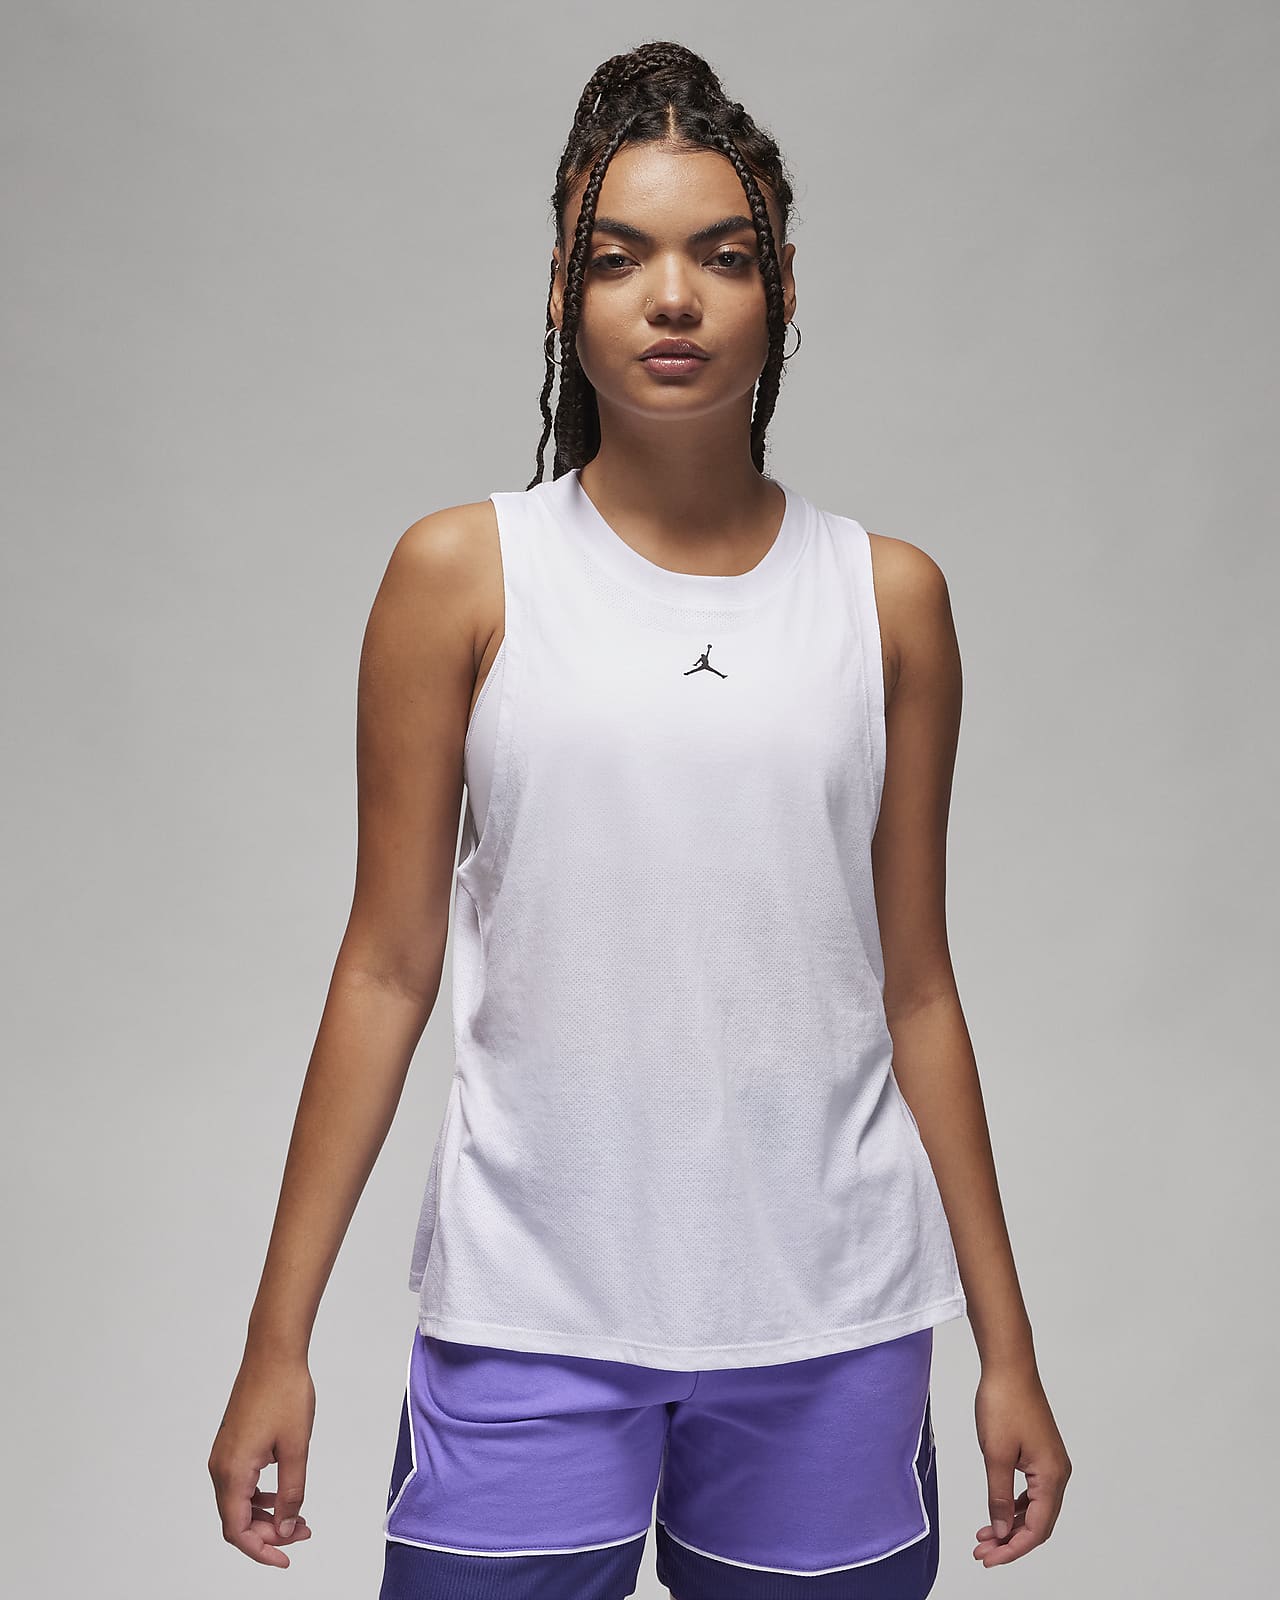 Air Jordan Women's Essential Tank Top in Dark Grey Heather Nike Jordan Brand